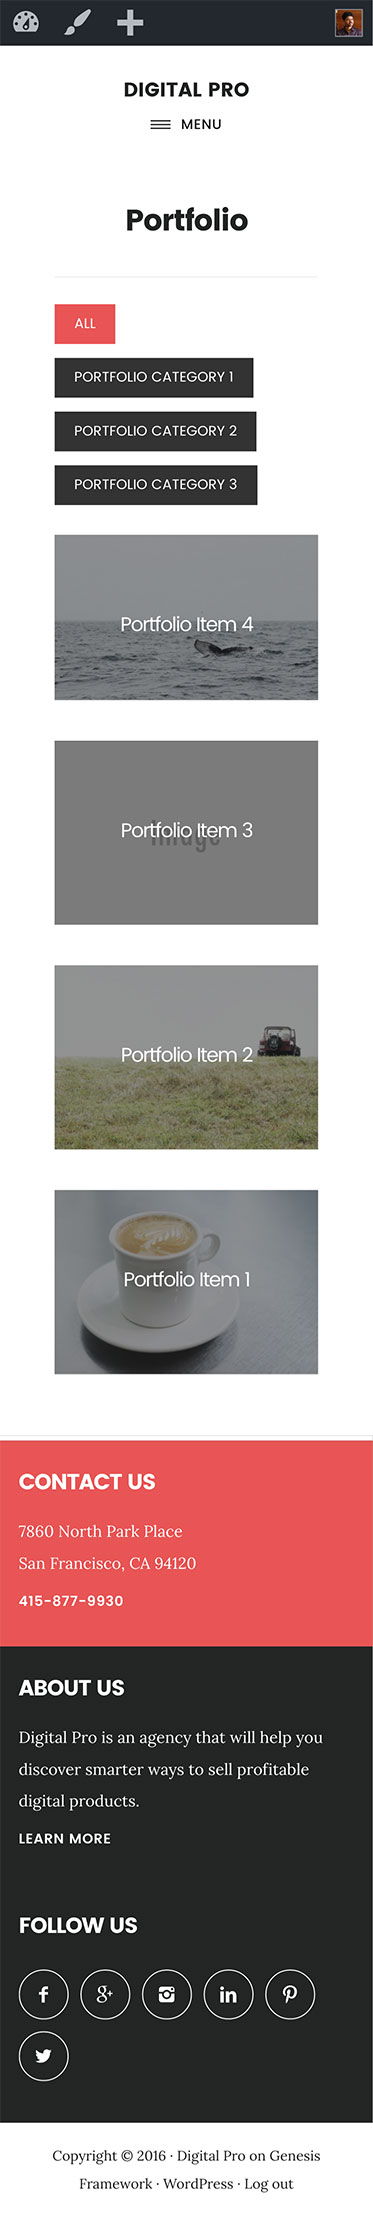 digital-pro-filterable-portfolio-iPhone-portrait